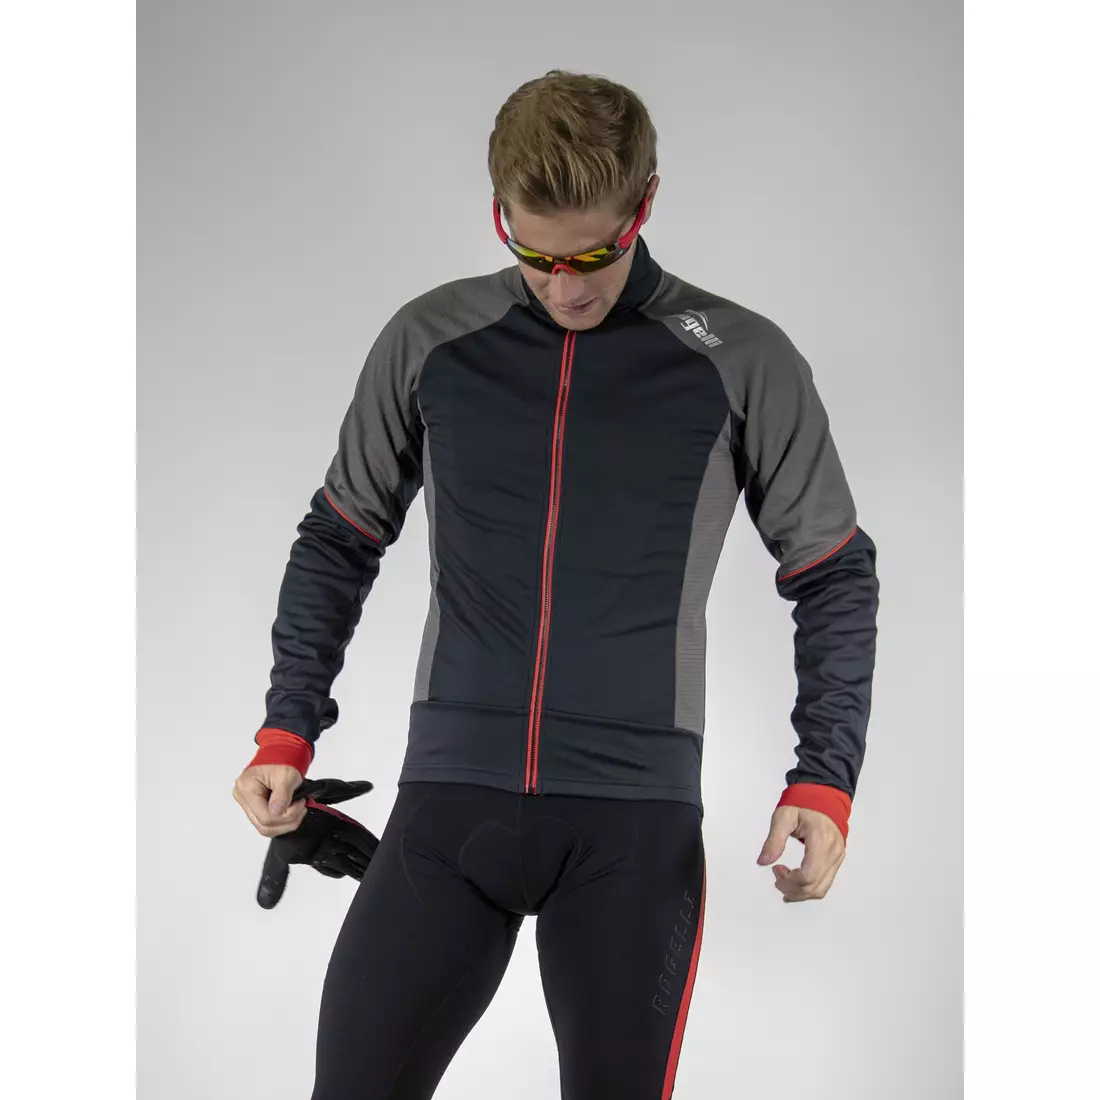 ROGELLI TRANI 4.0 winter softshell cycling jacket, black-gray-red